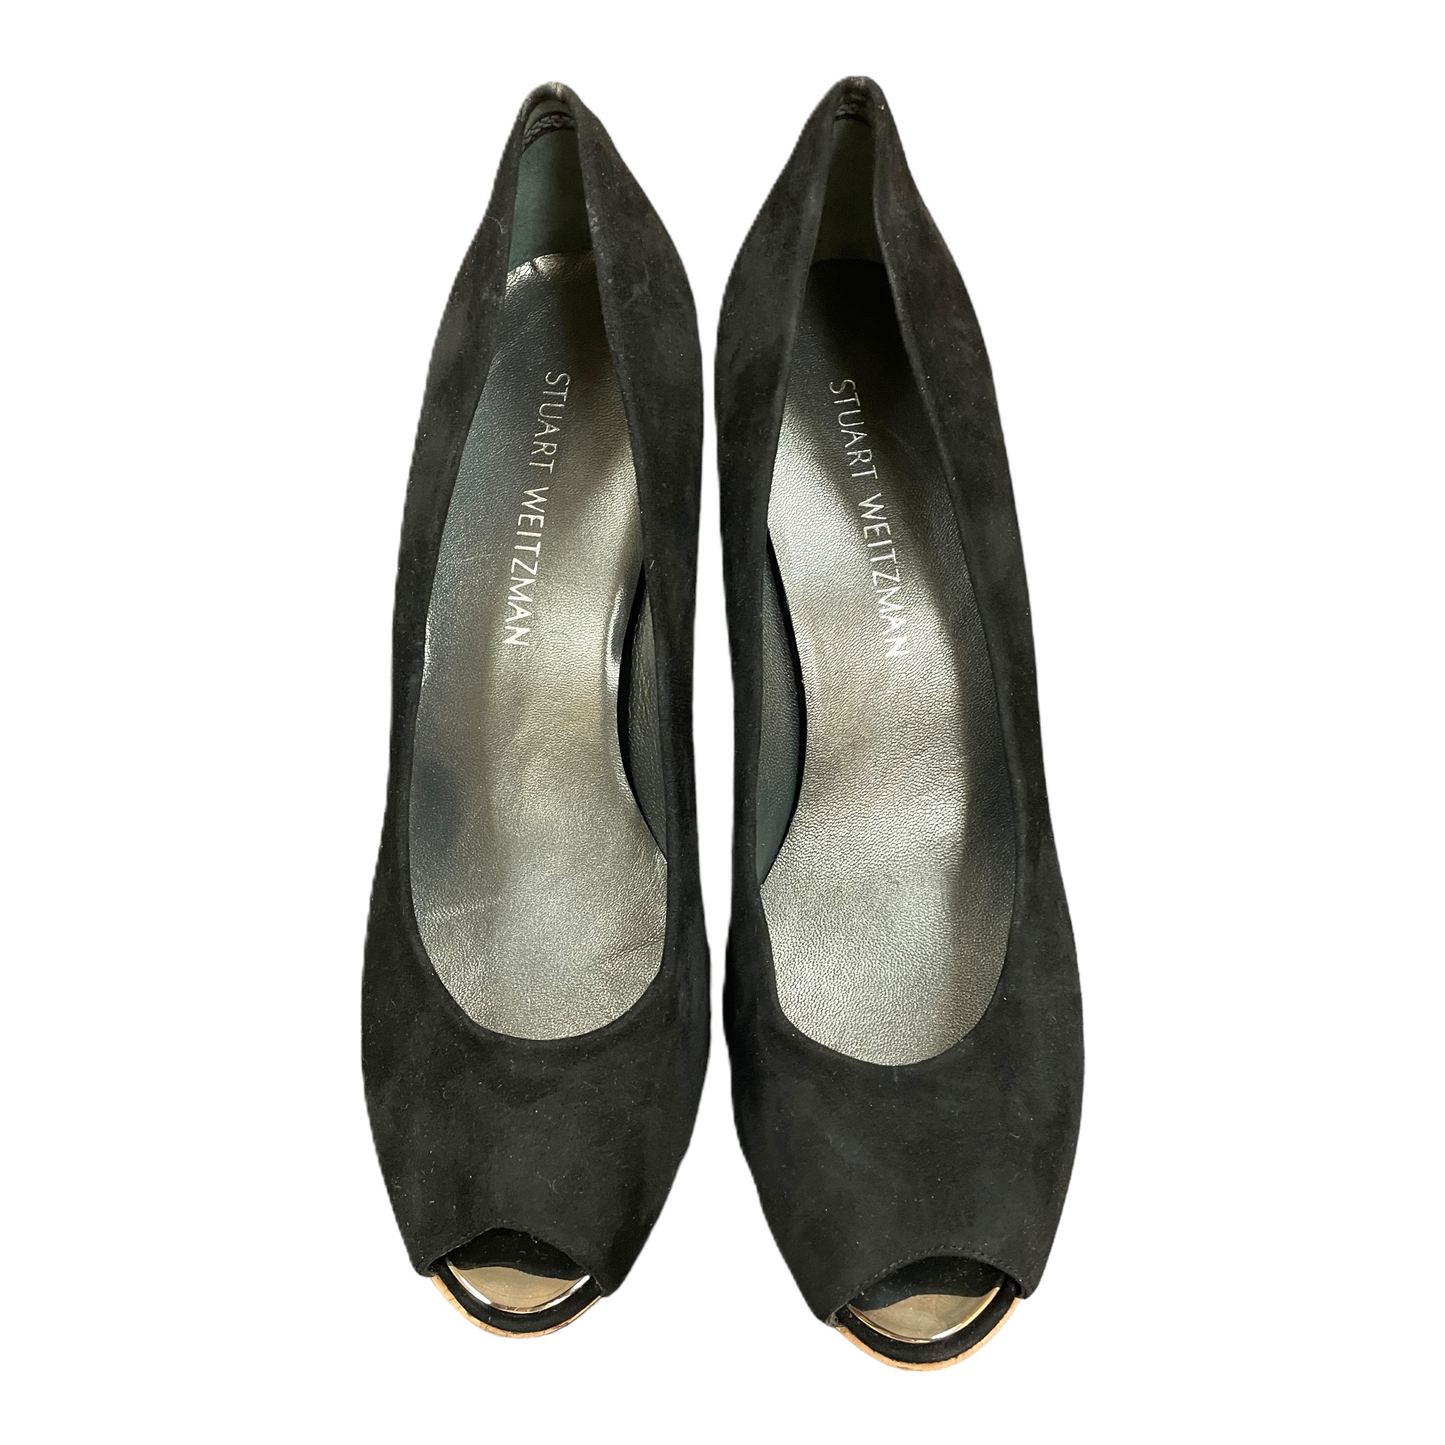 Black Shoes Heels Wedge By Stuart Weitzman, Size: 10